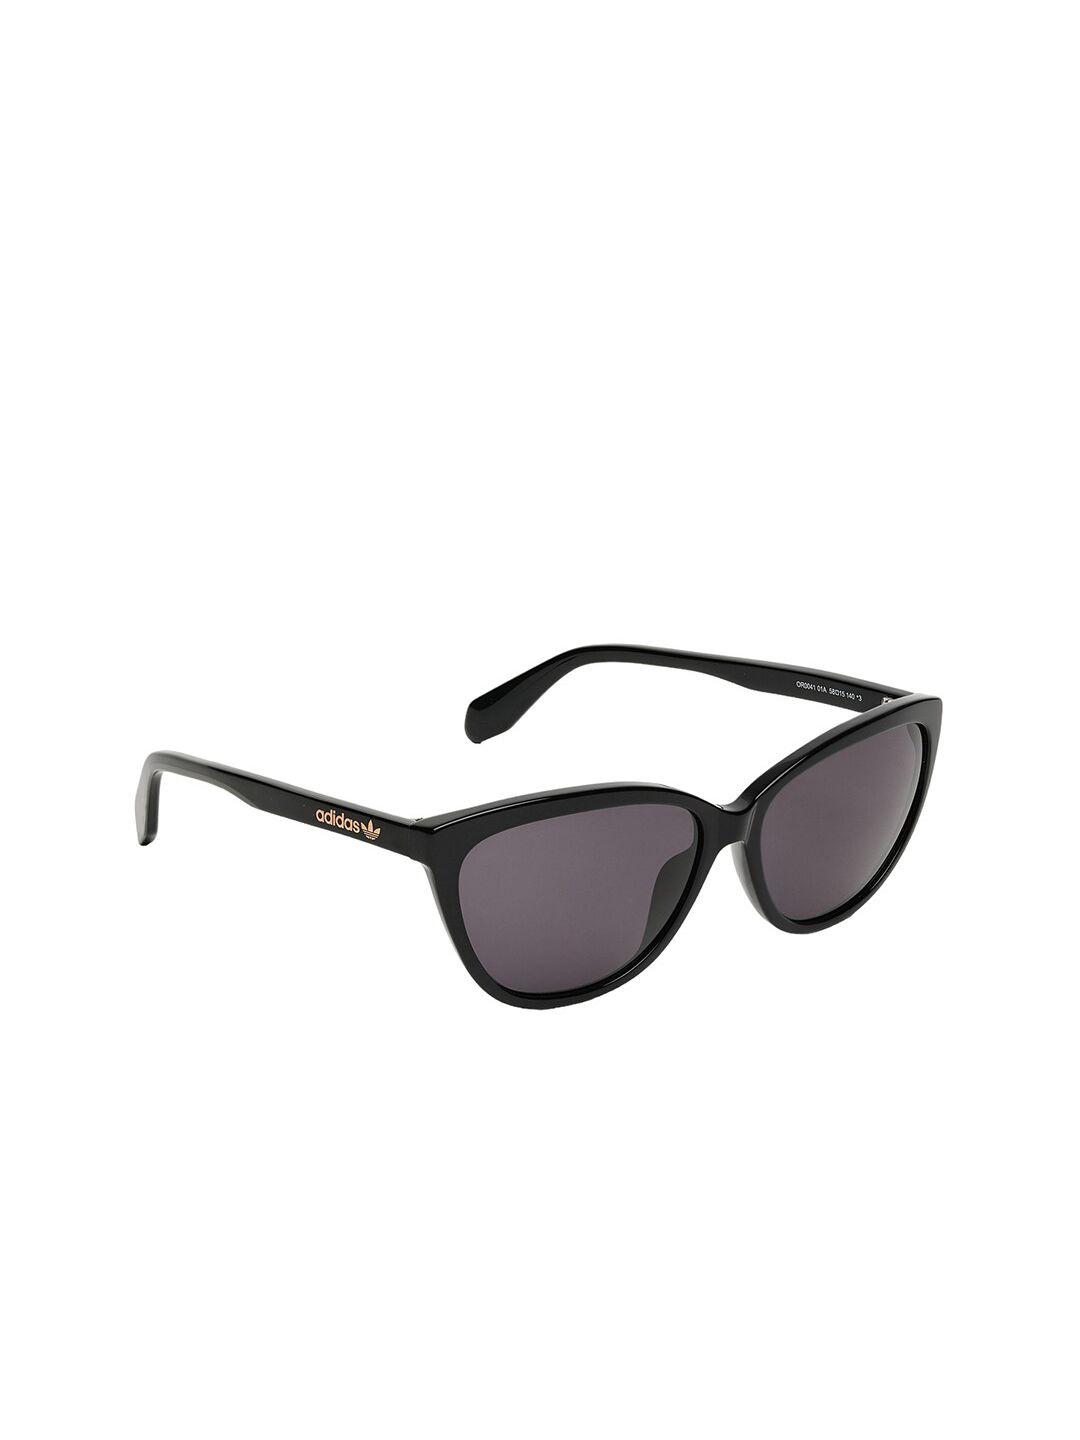 adidas women uv protected lens cateye sunglasses